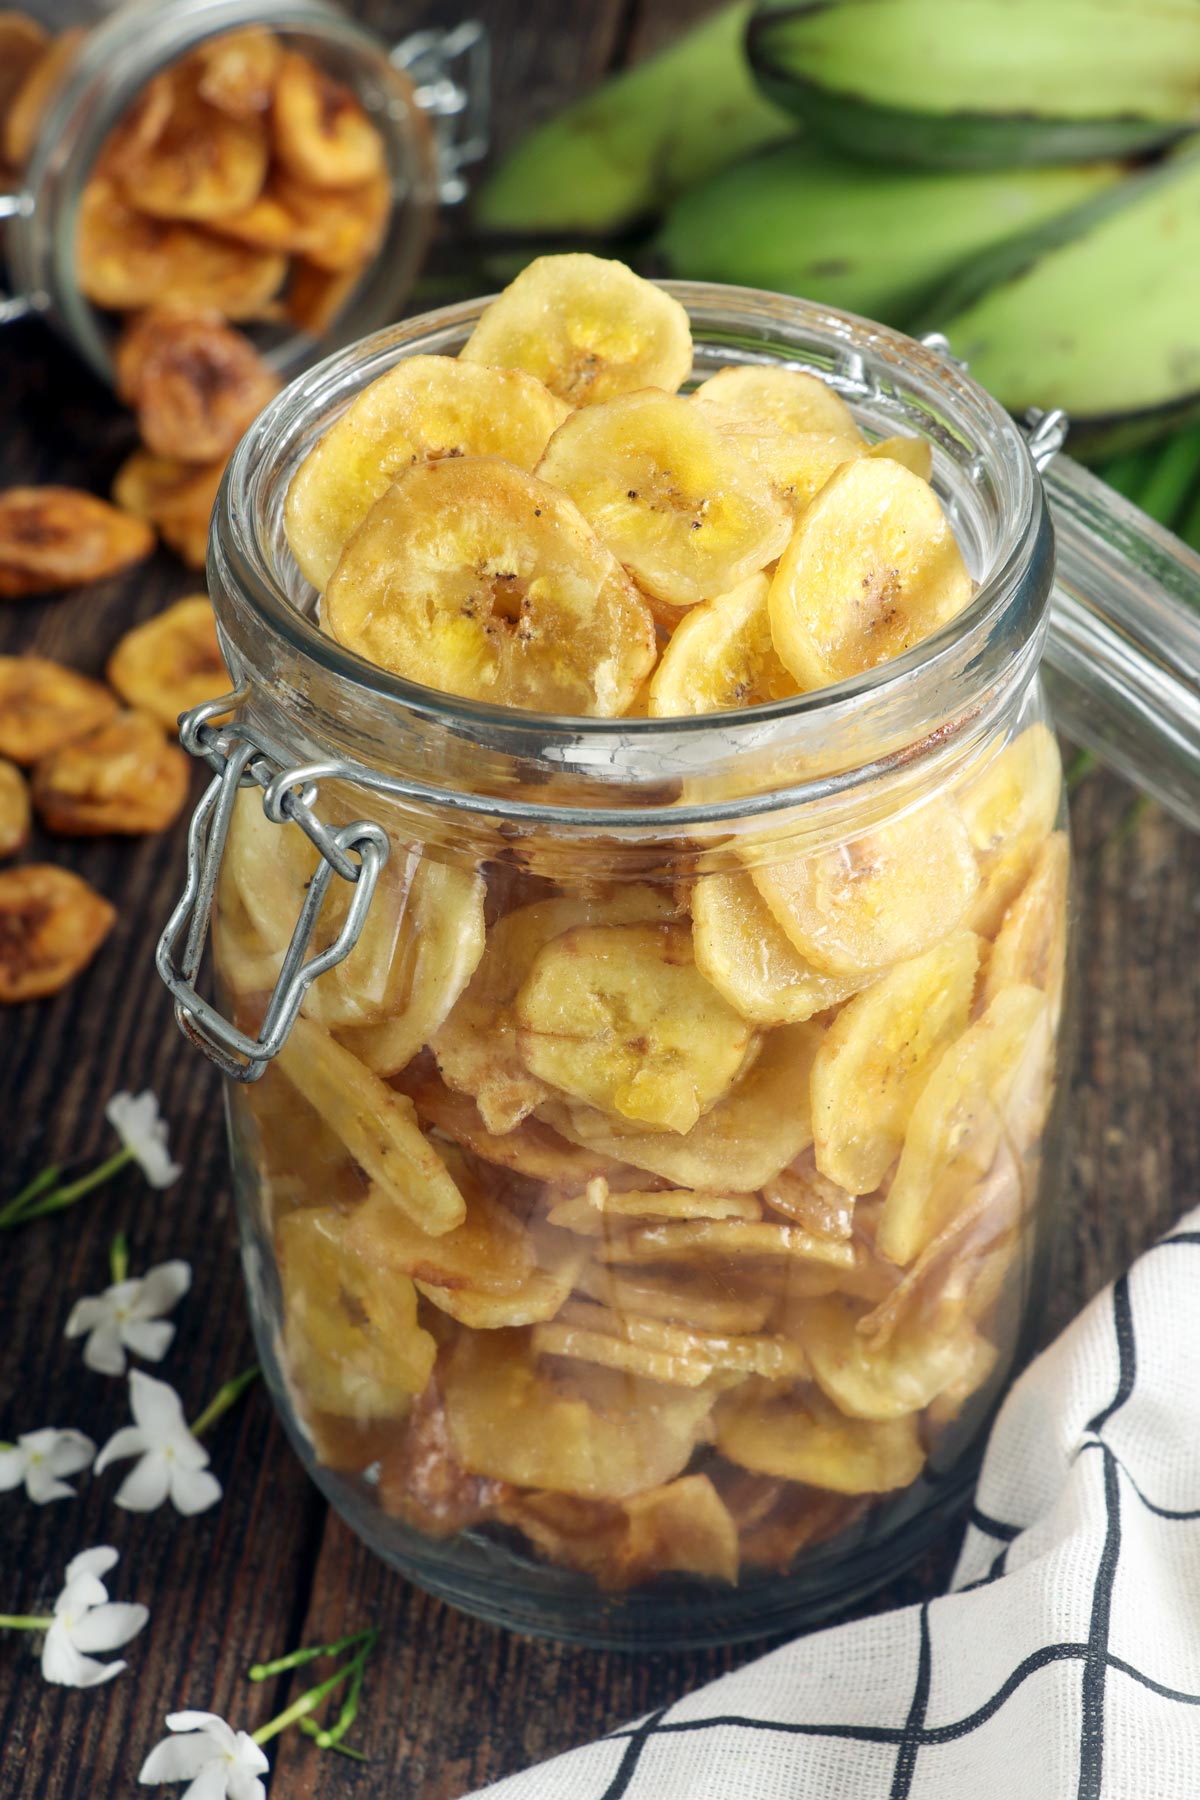 Homemade banana chips in a jar.